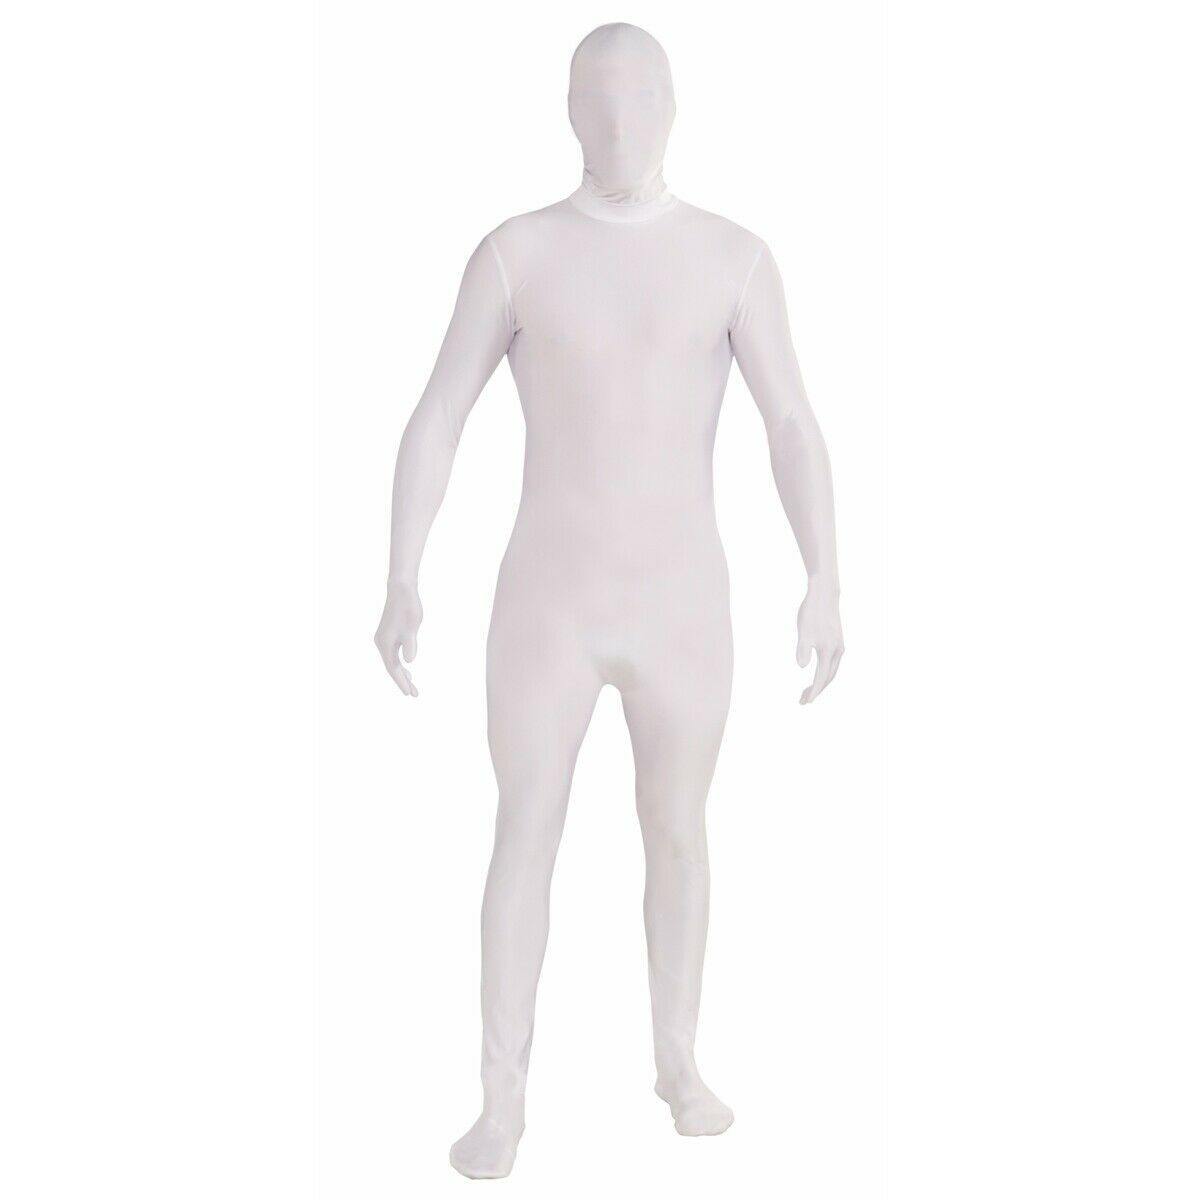 Mens Deluxe White Invisible Man Costume